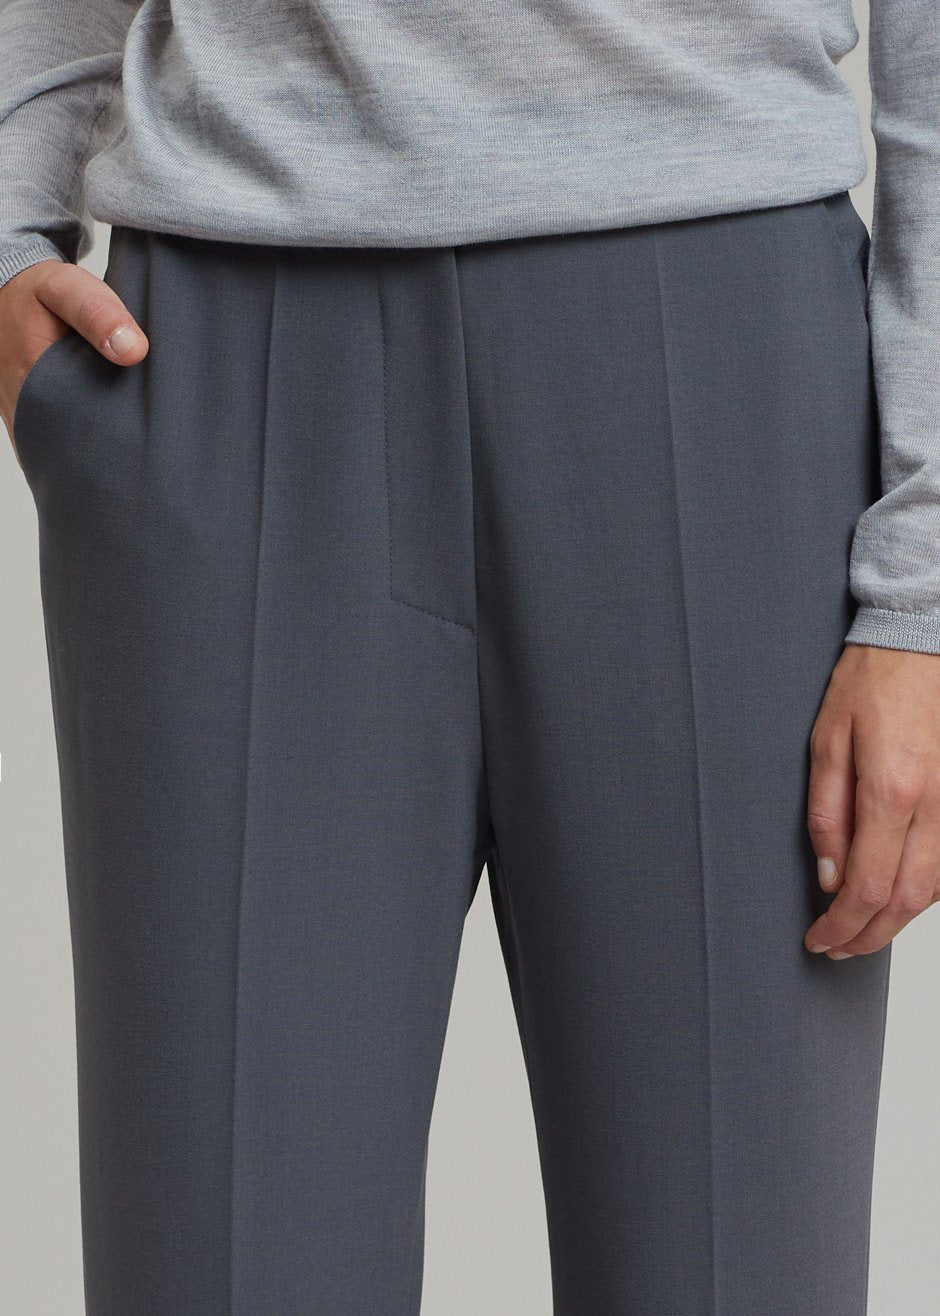 Nanushka Darby Stirrup Suit Pants - Grey - 8